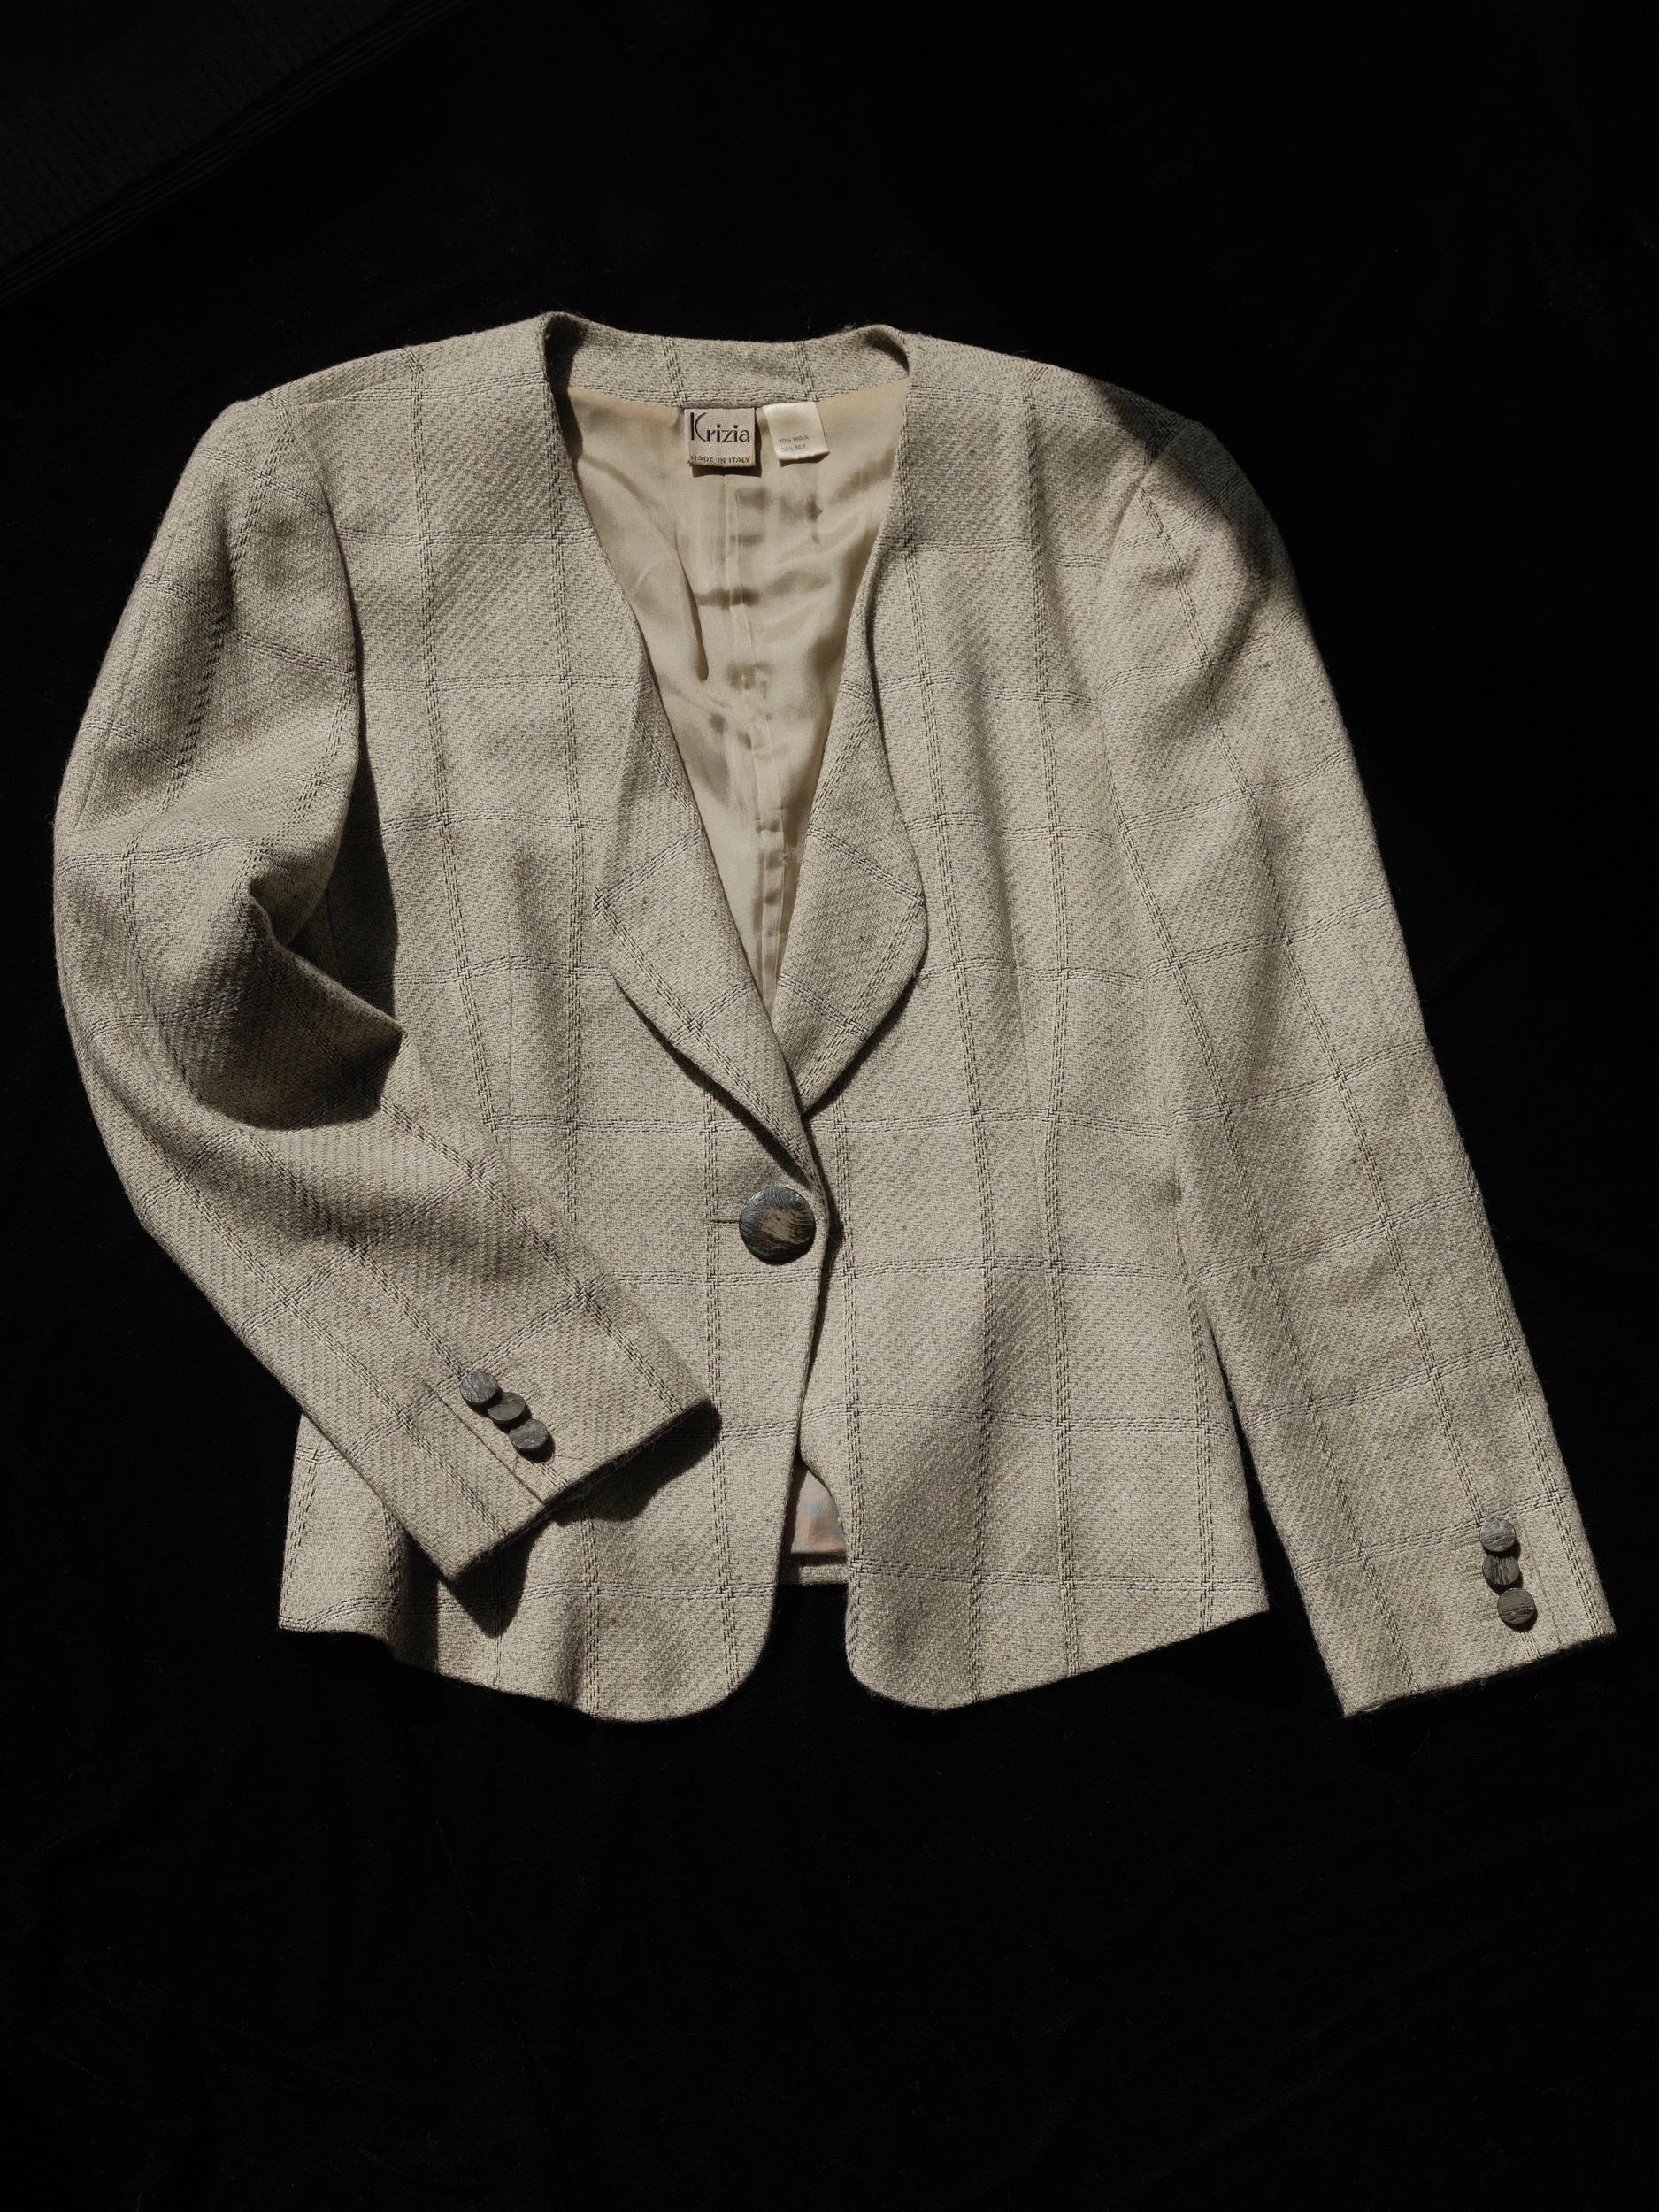 Krizia Plaid Wool and Silk Jacket 1980's Sz 42 For Sale 4